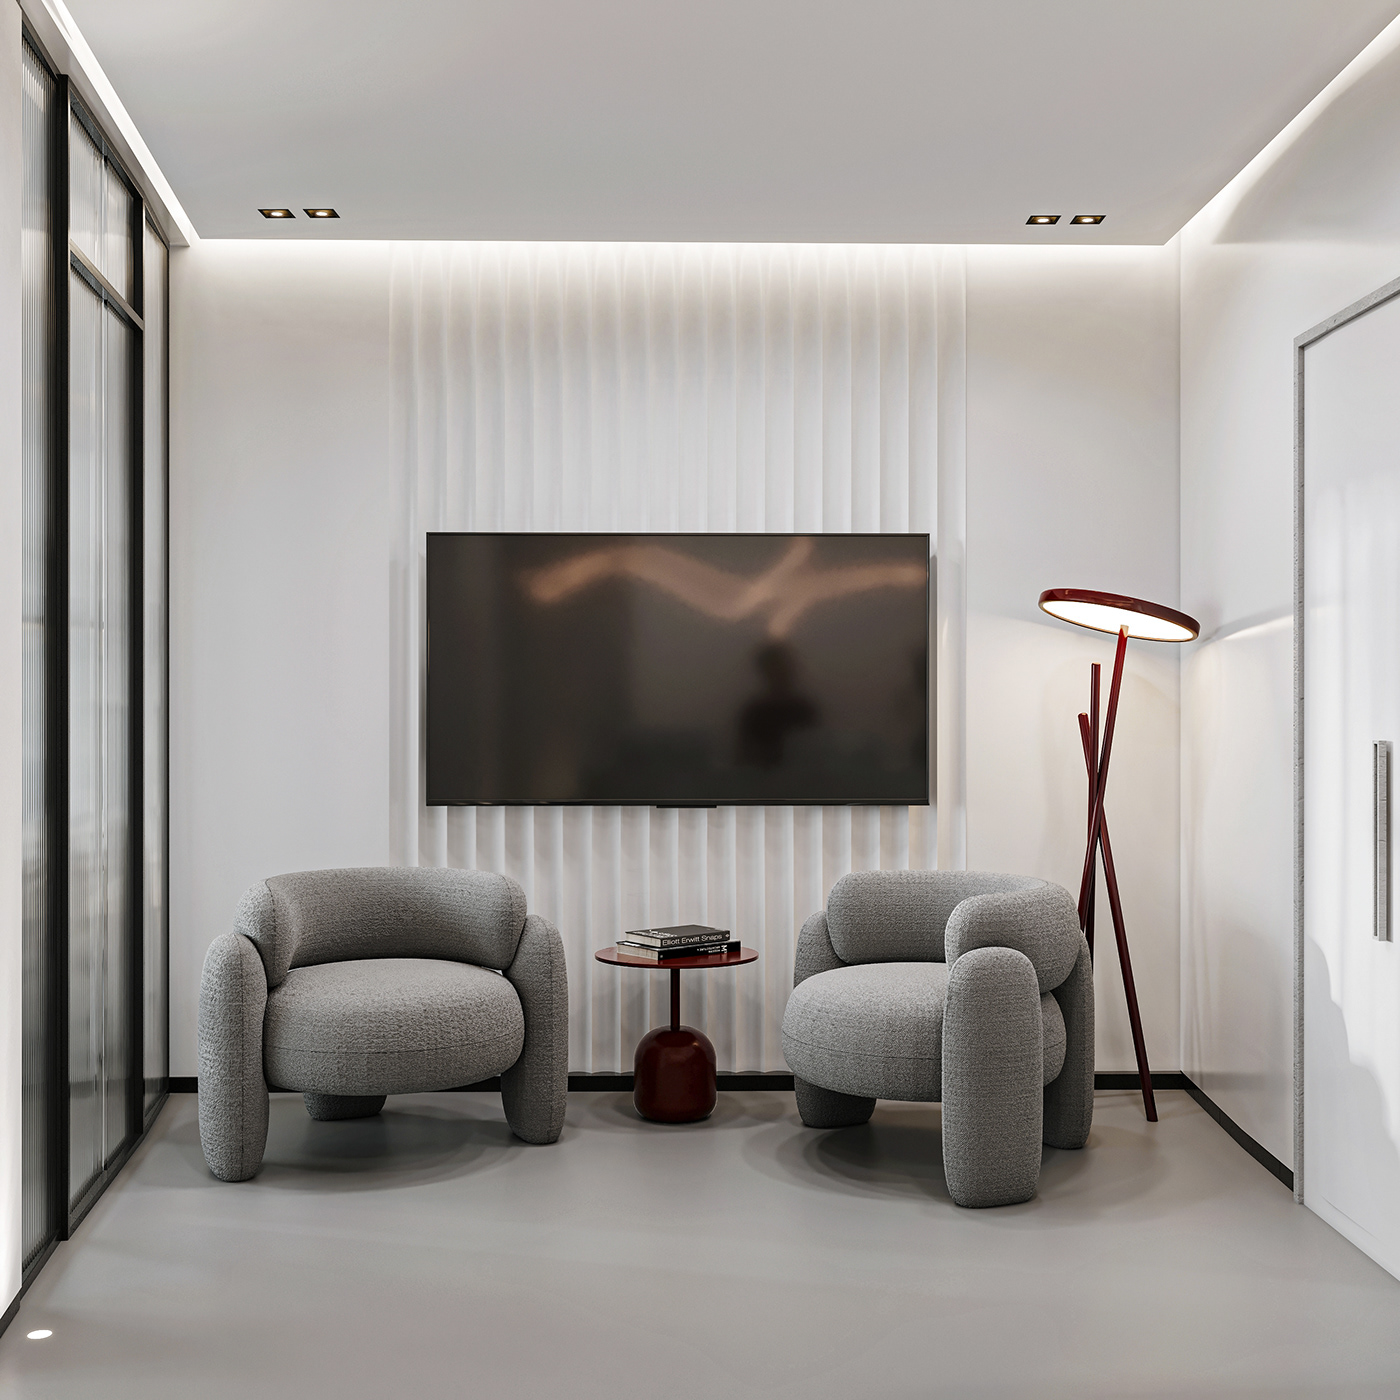 Interior clinic dentist design 3ds max visualization Render architecture modern